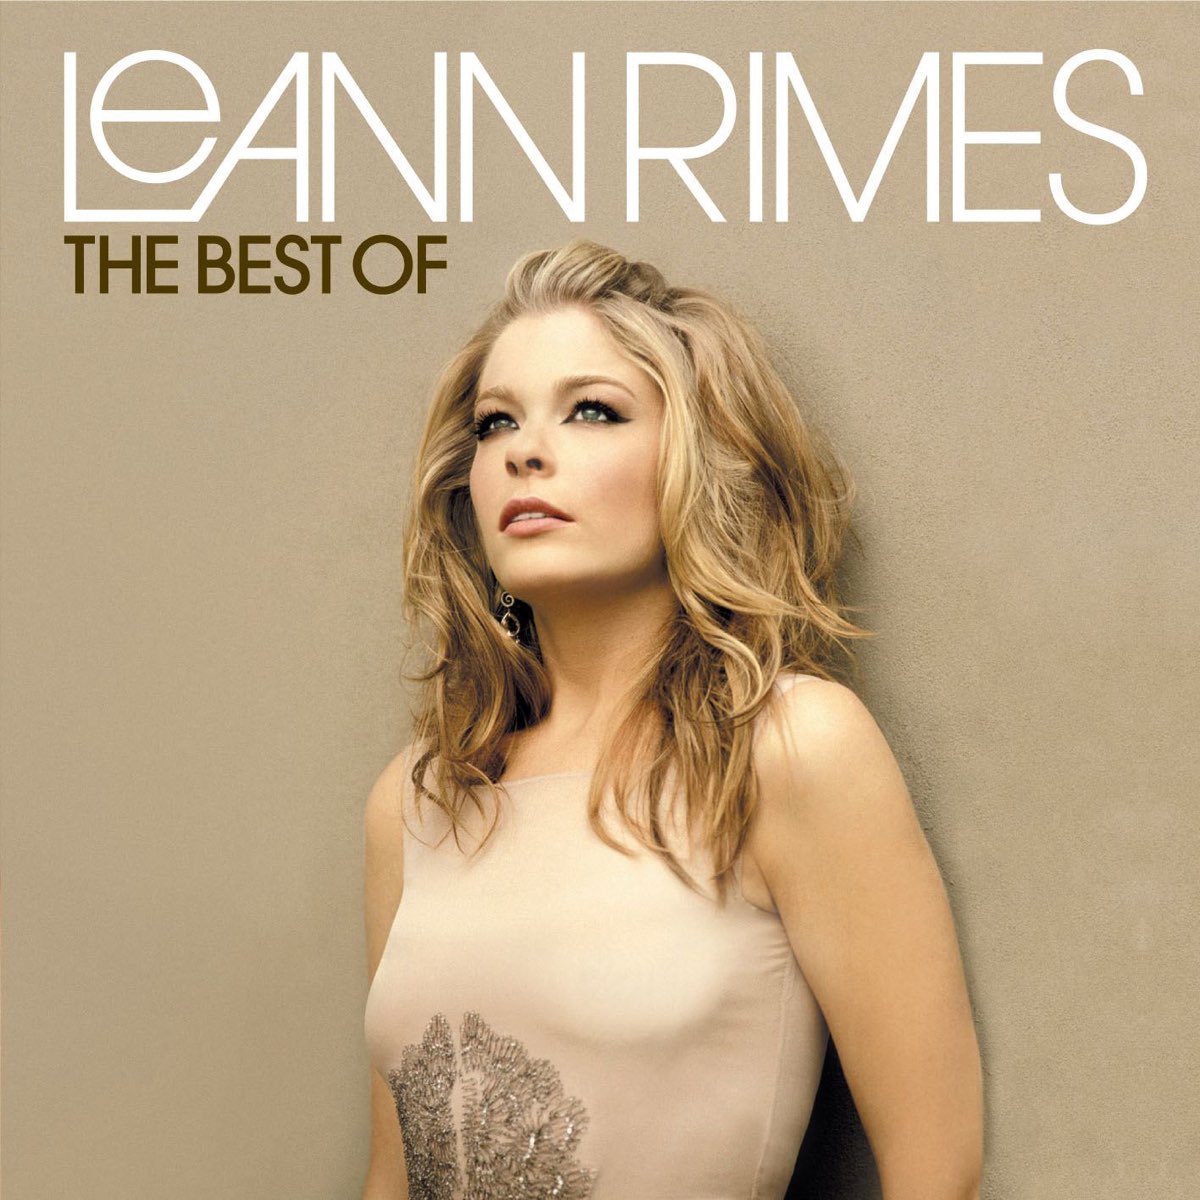 ‎The Best of LeAnn Rimes - Album by LeAnn Rimes - Apple Music